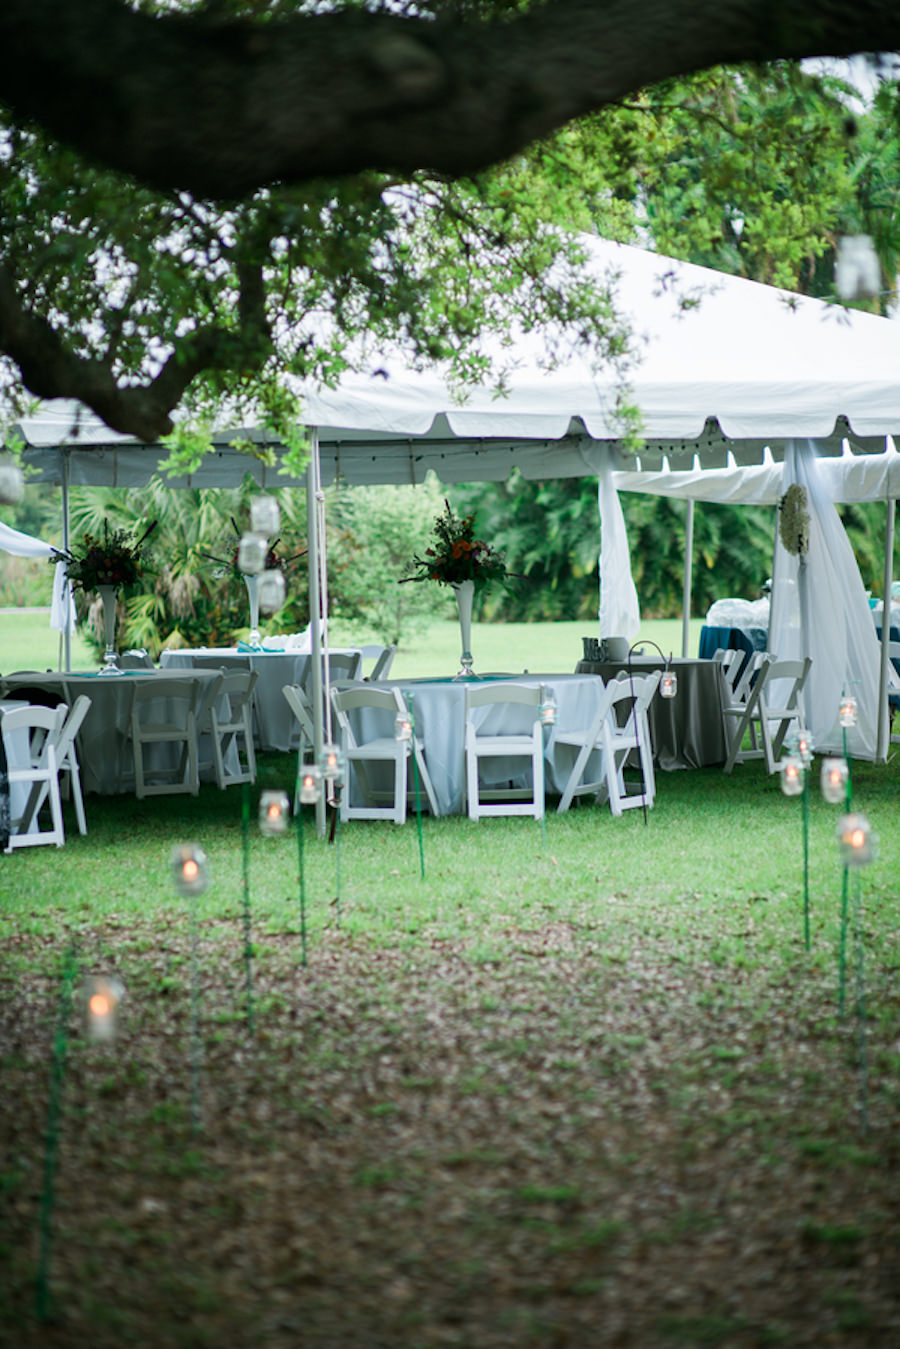 Outdoor, Tented Bradenton Garden Wedding Reception with Accent Candlelight